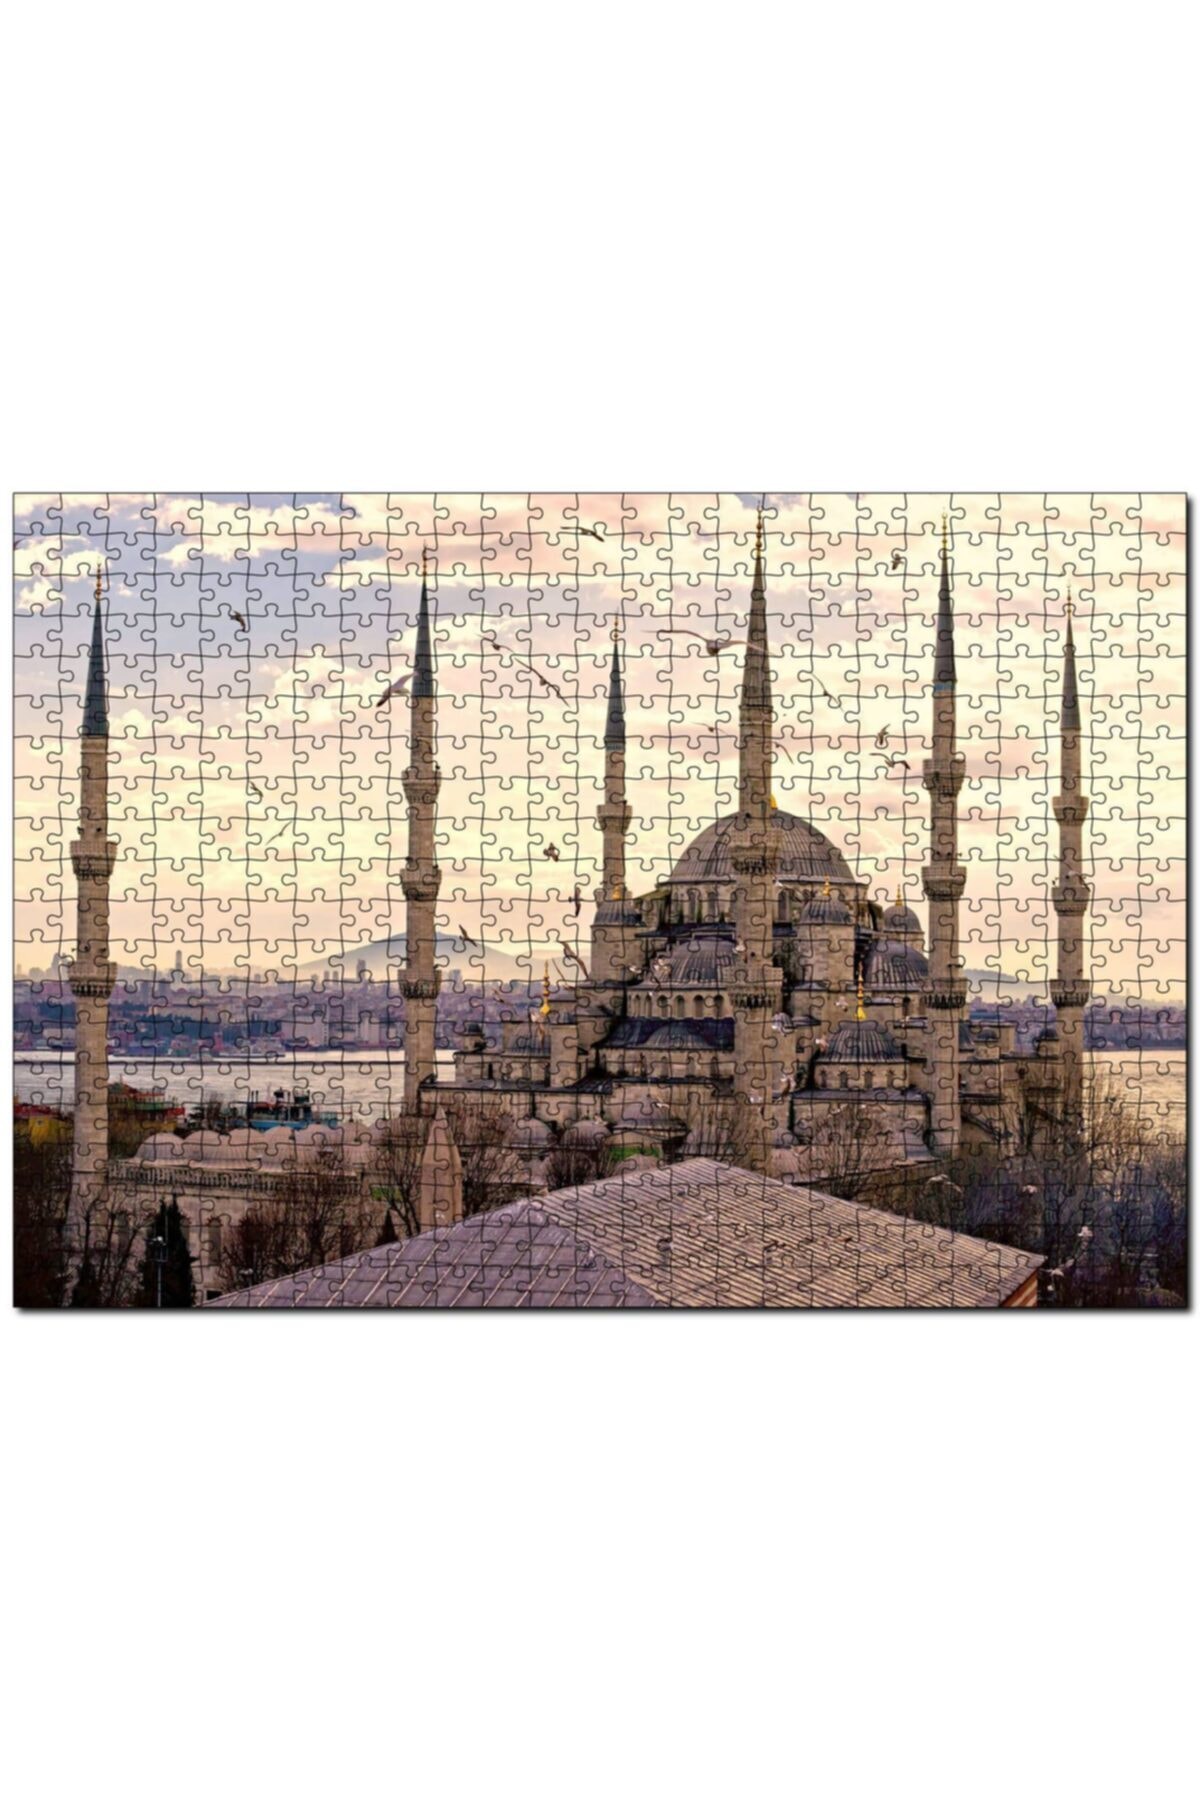 Cakapuzzle Sultan Ahmet Cami Görseli 1000 Parça Puzzle Yapboz Mdf(ahşap)